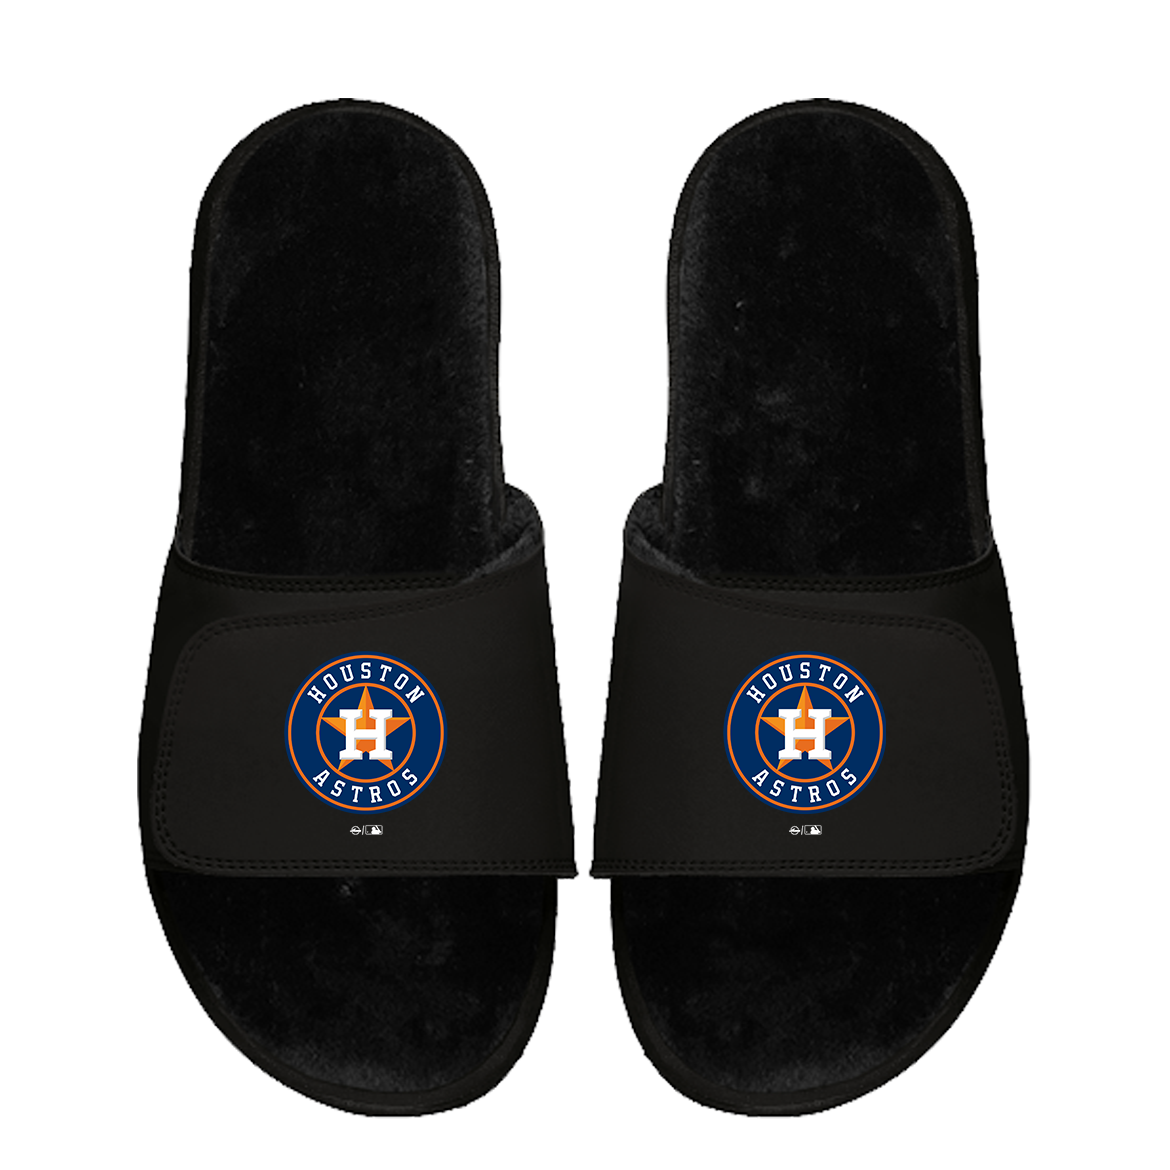 Houston Astros Primary Black Fur